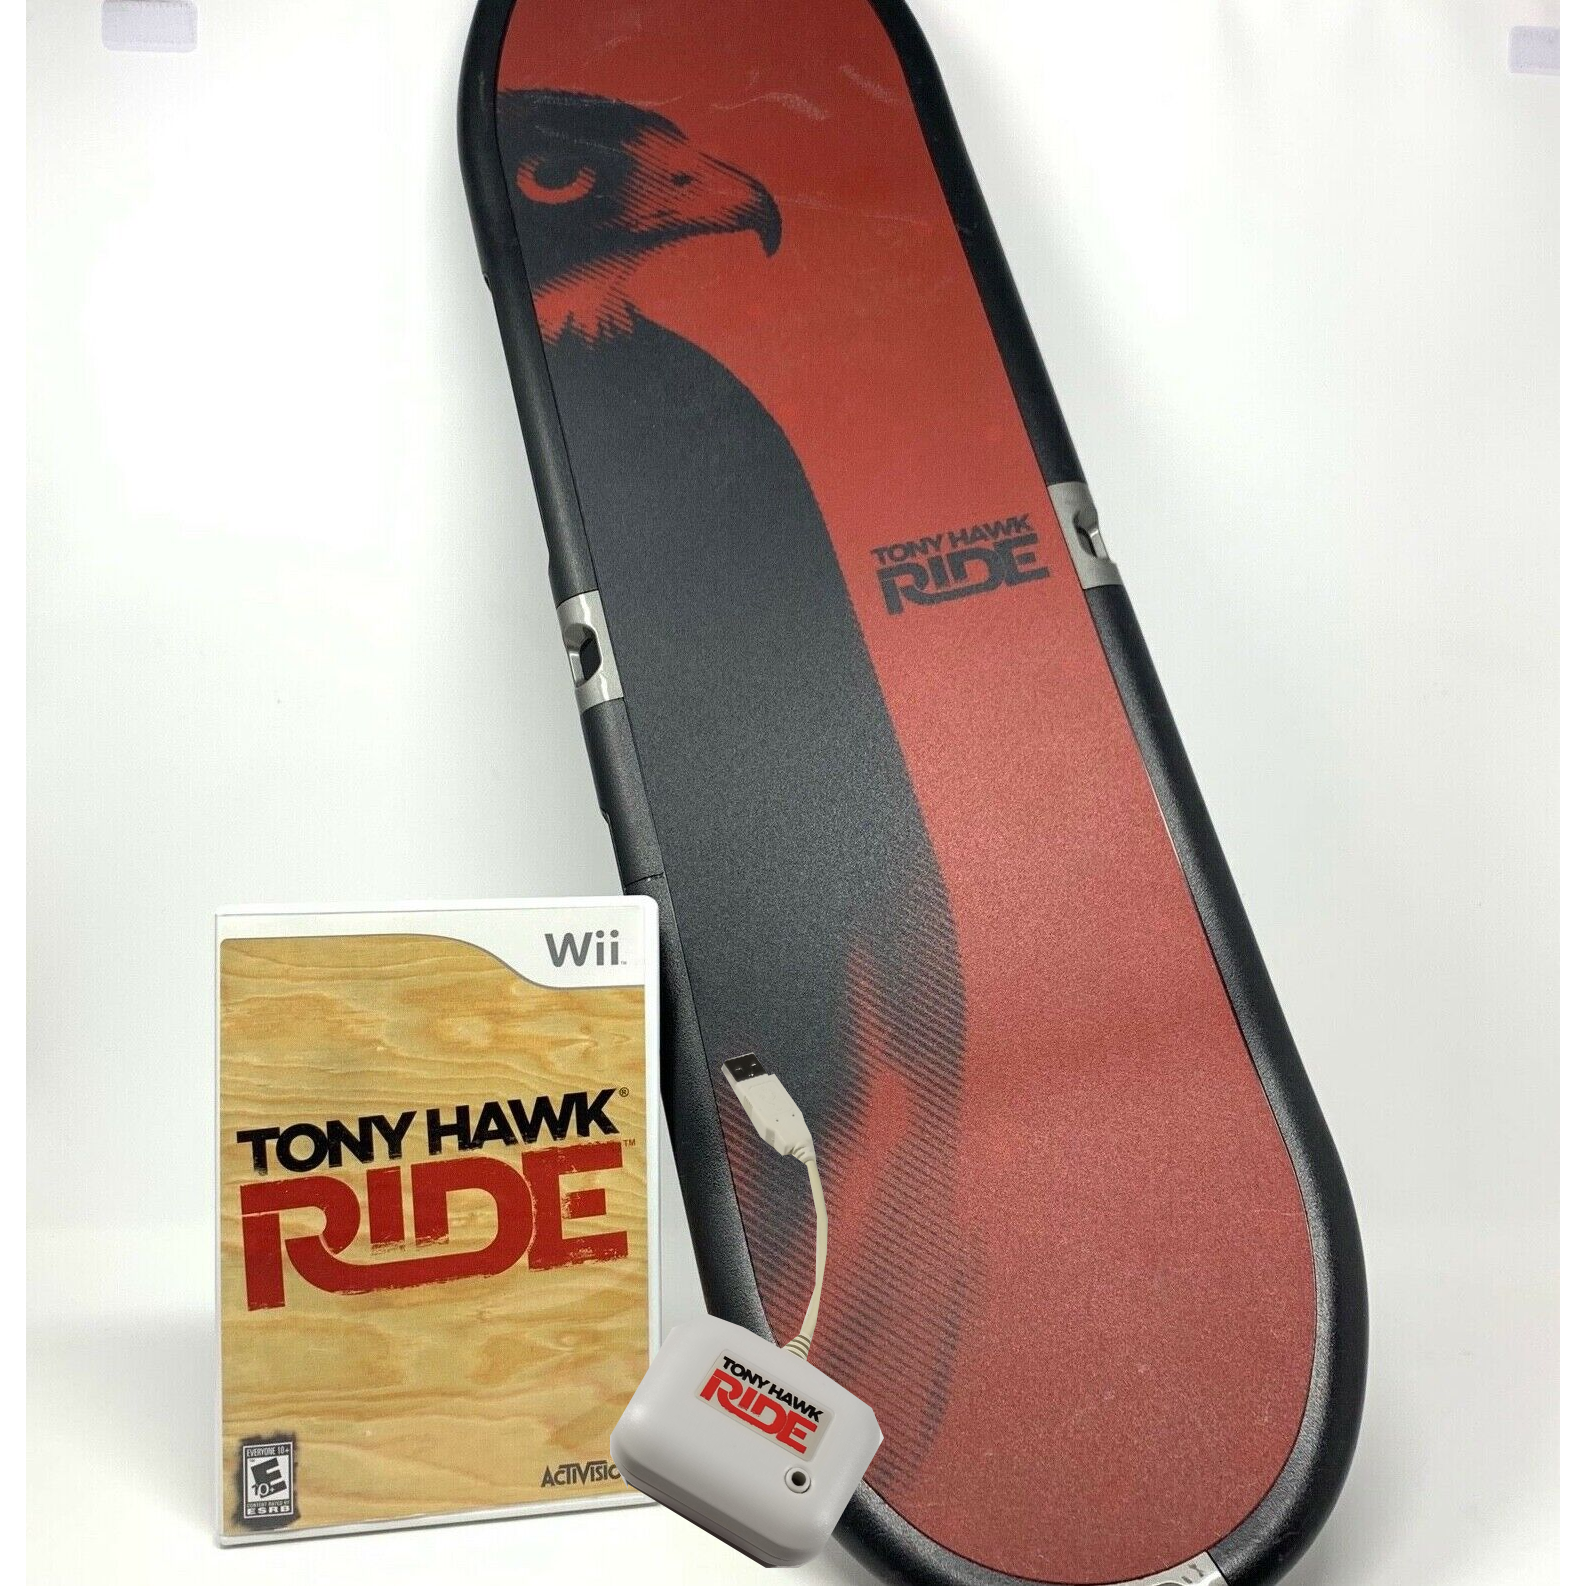 Wii - Tony Hawk Ride with Board